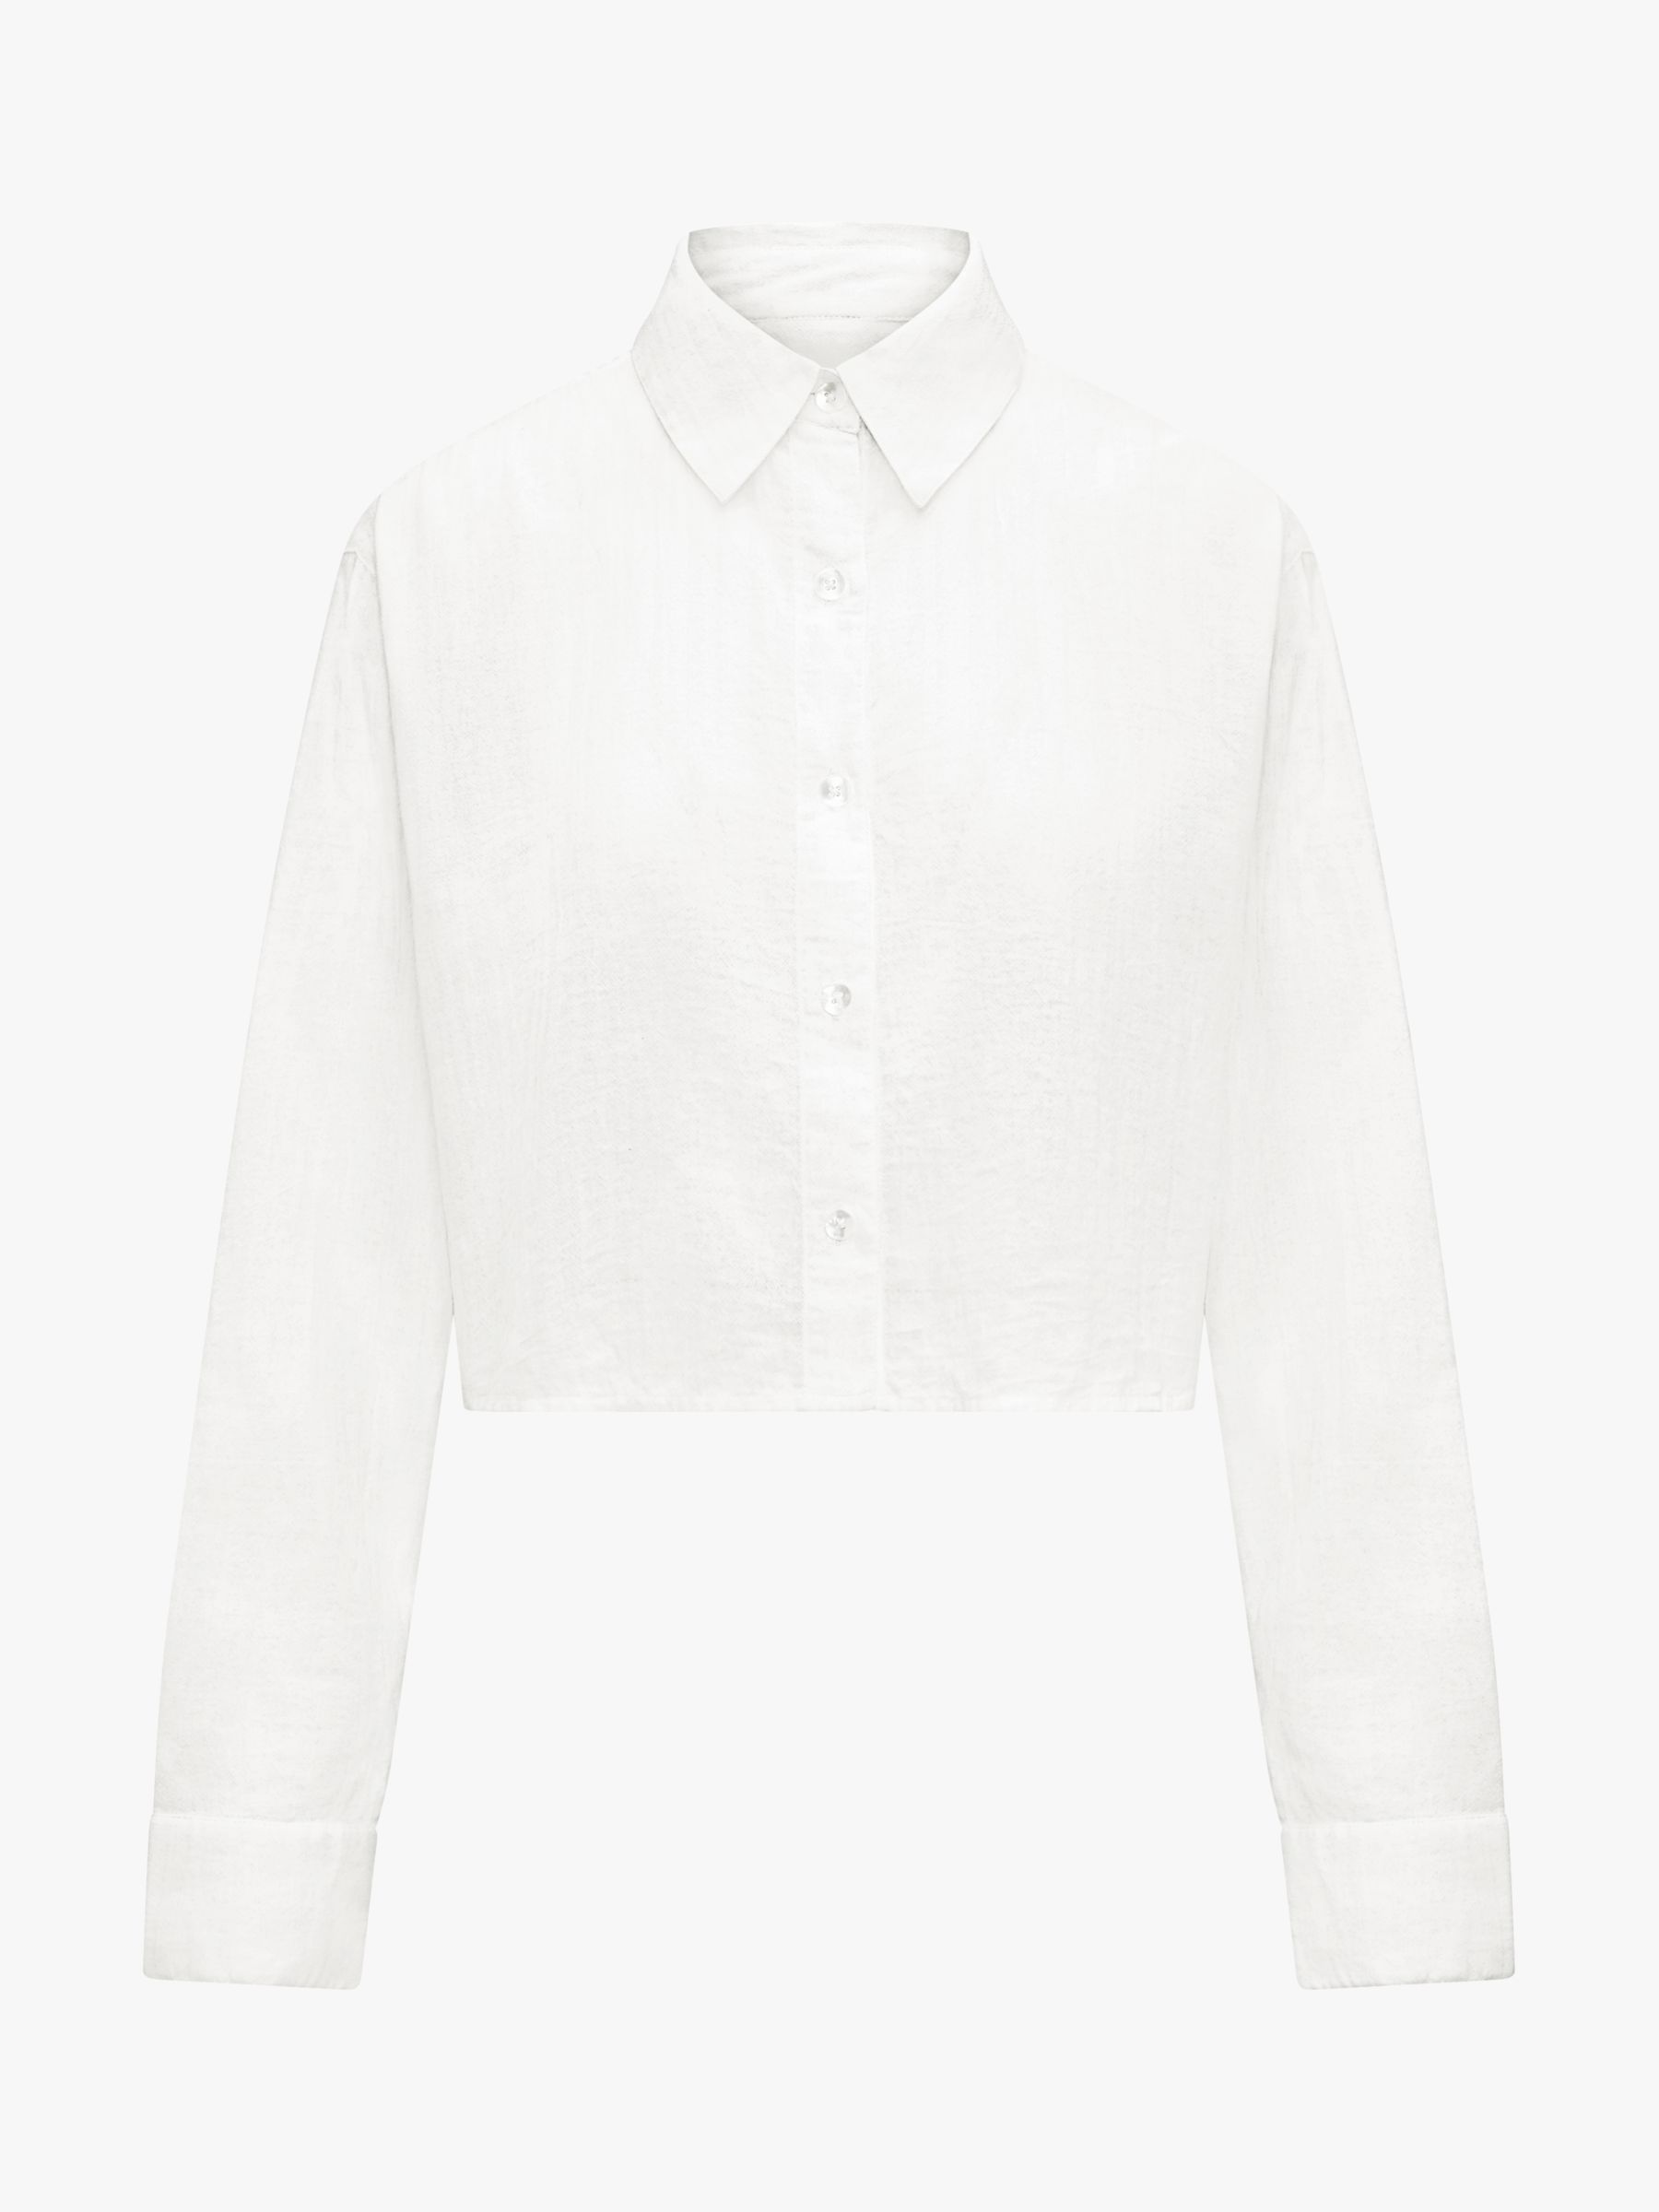 Nudea Organic Cotton Cropped Night Shirt, White, XS